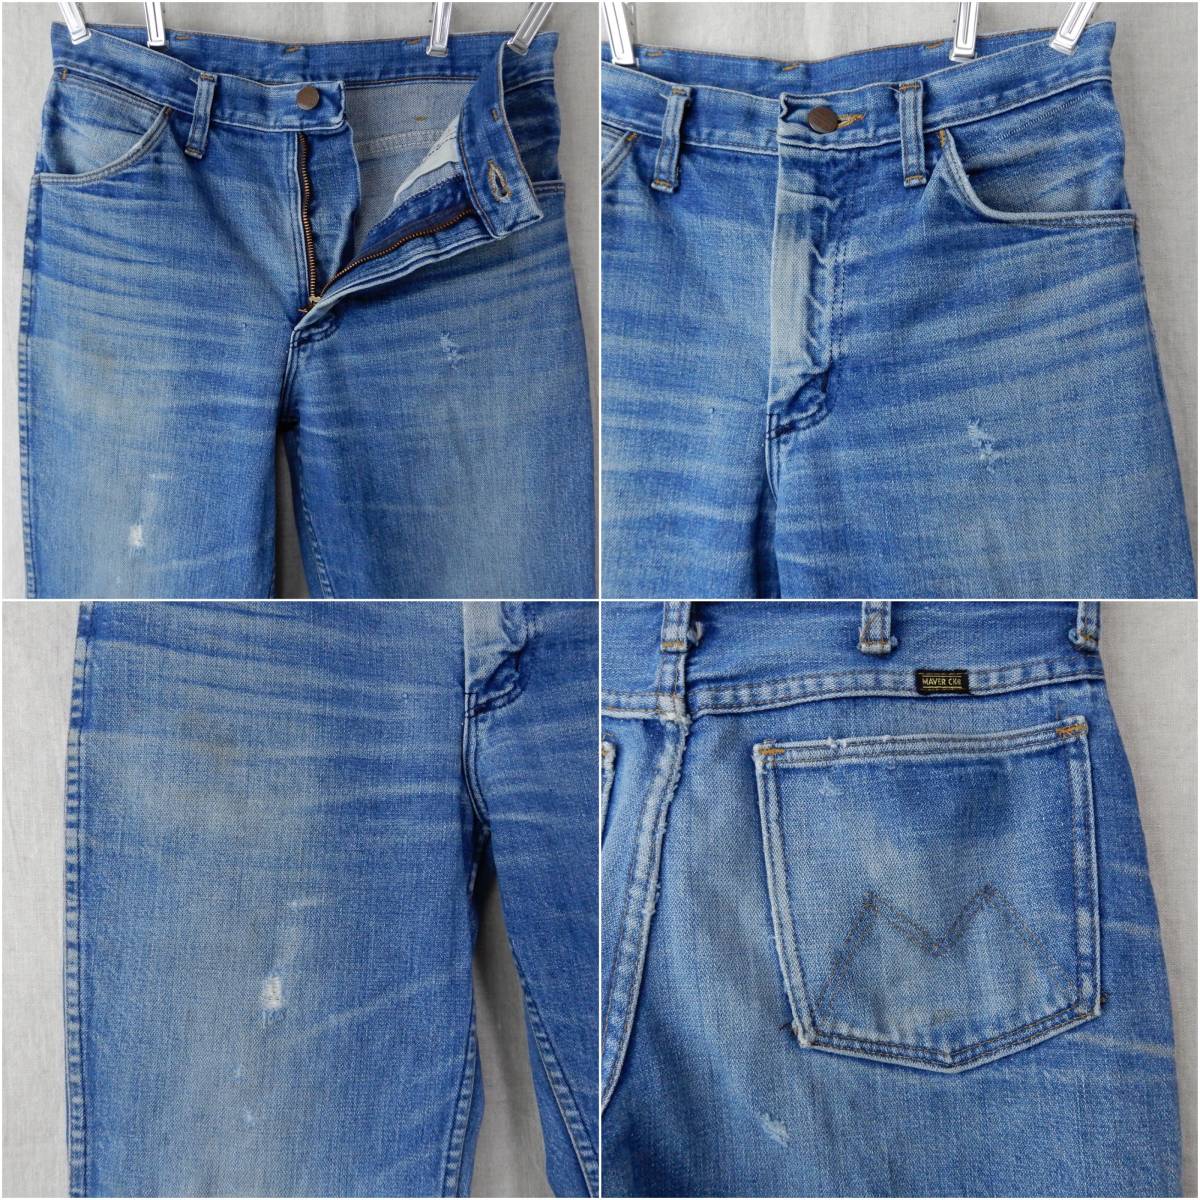 MAVERICK INDIGO DENIM PANTS MADE IN USA 1970s Vintagema- Berik indigo Denim Vintage jeans 1970 period Vintage 